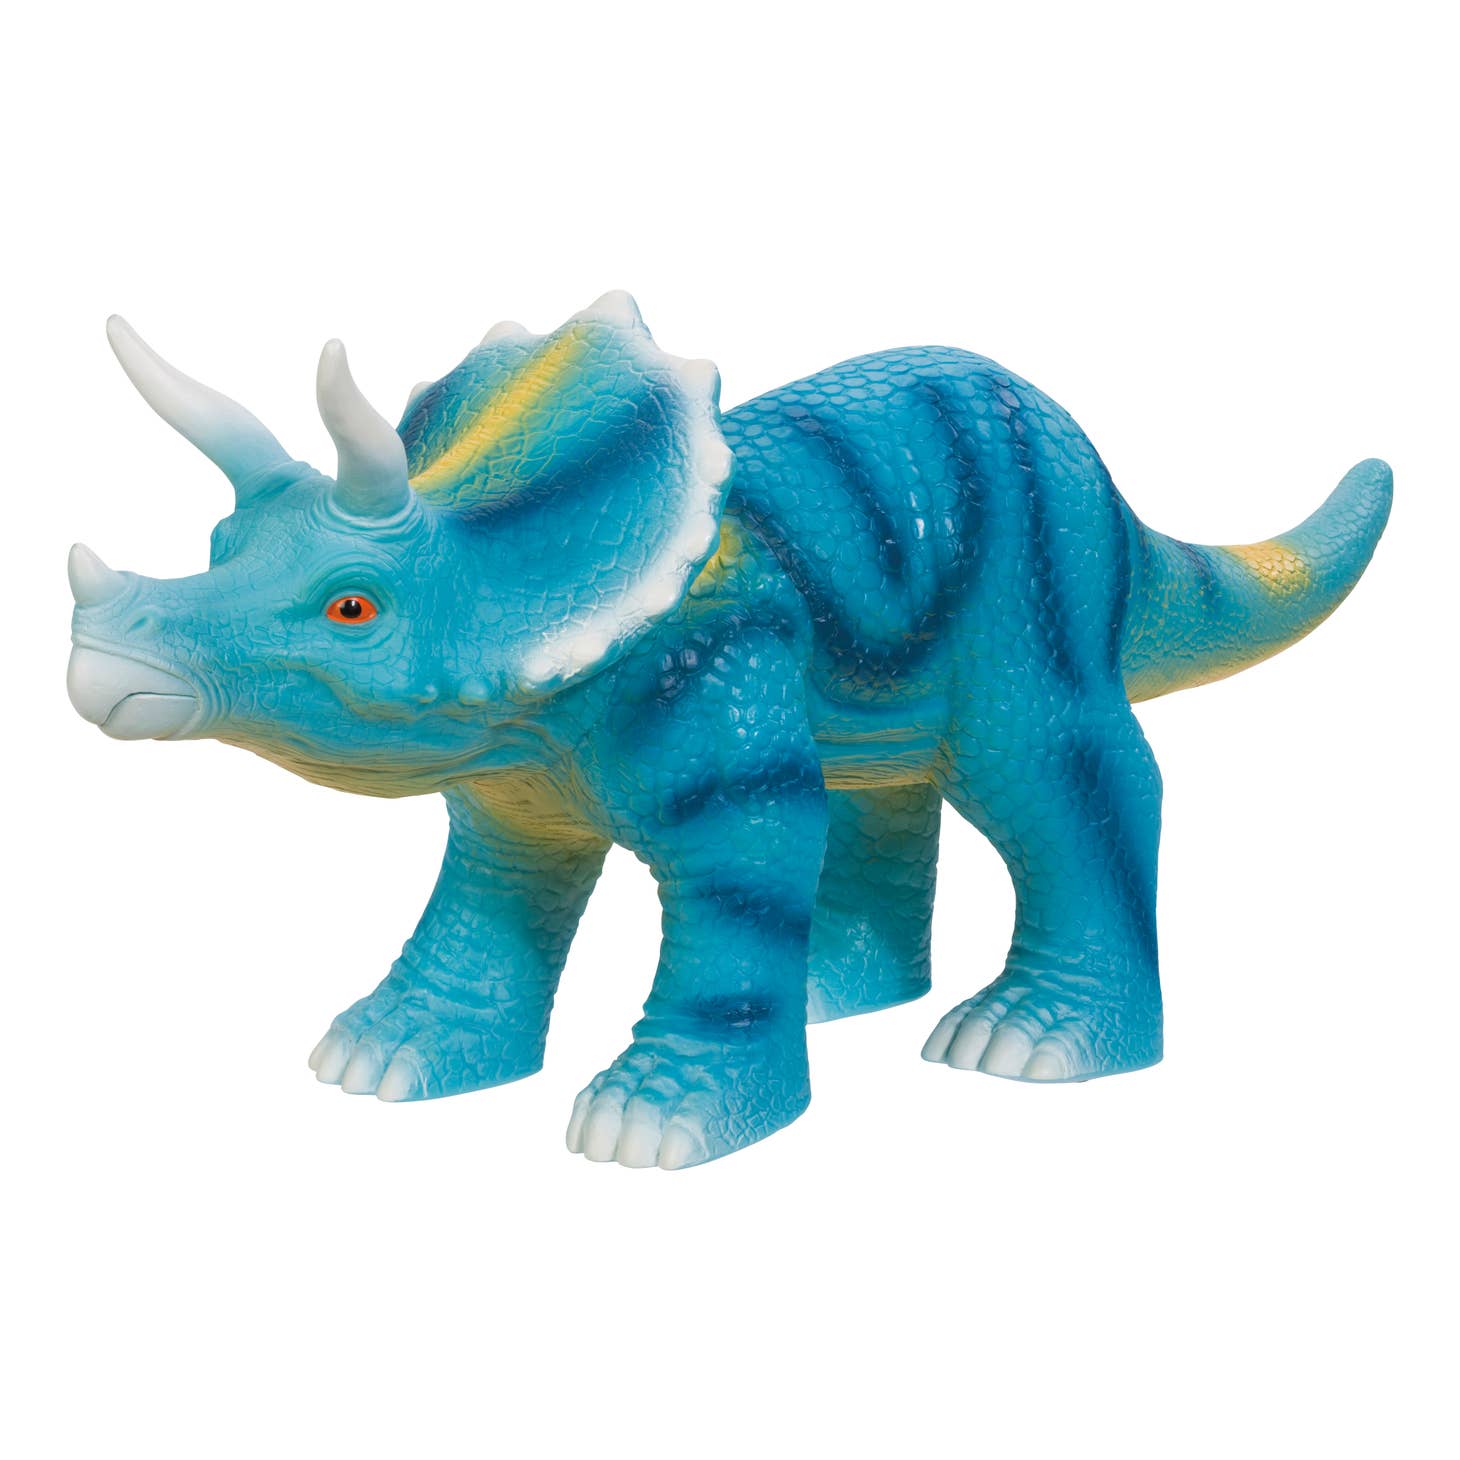 Epic Toy Dinosaur